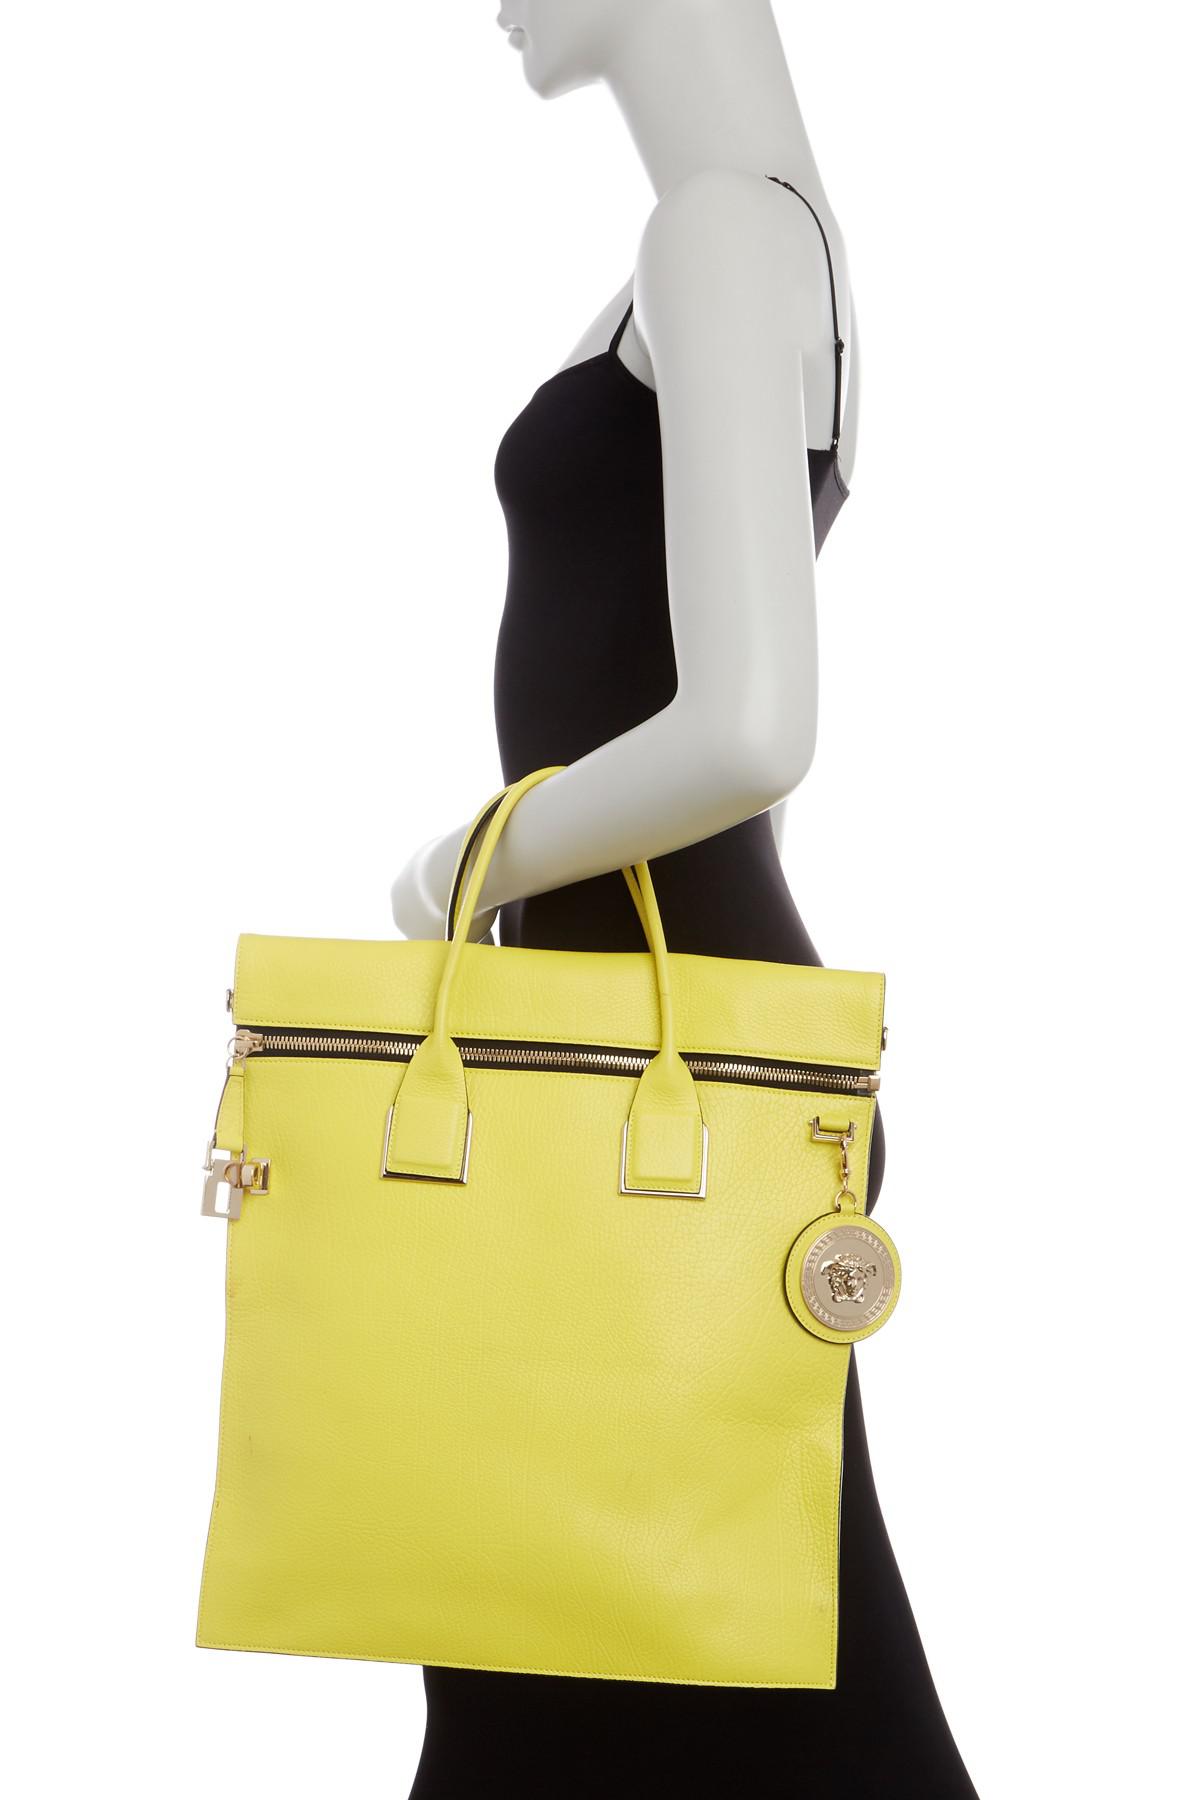 Versace Borsa Vitello Leather Satchel Bag in Yellow - Lyst